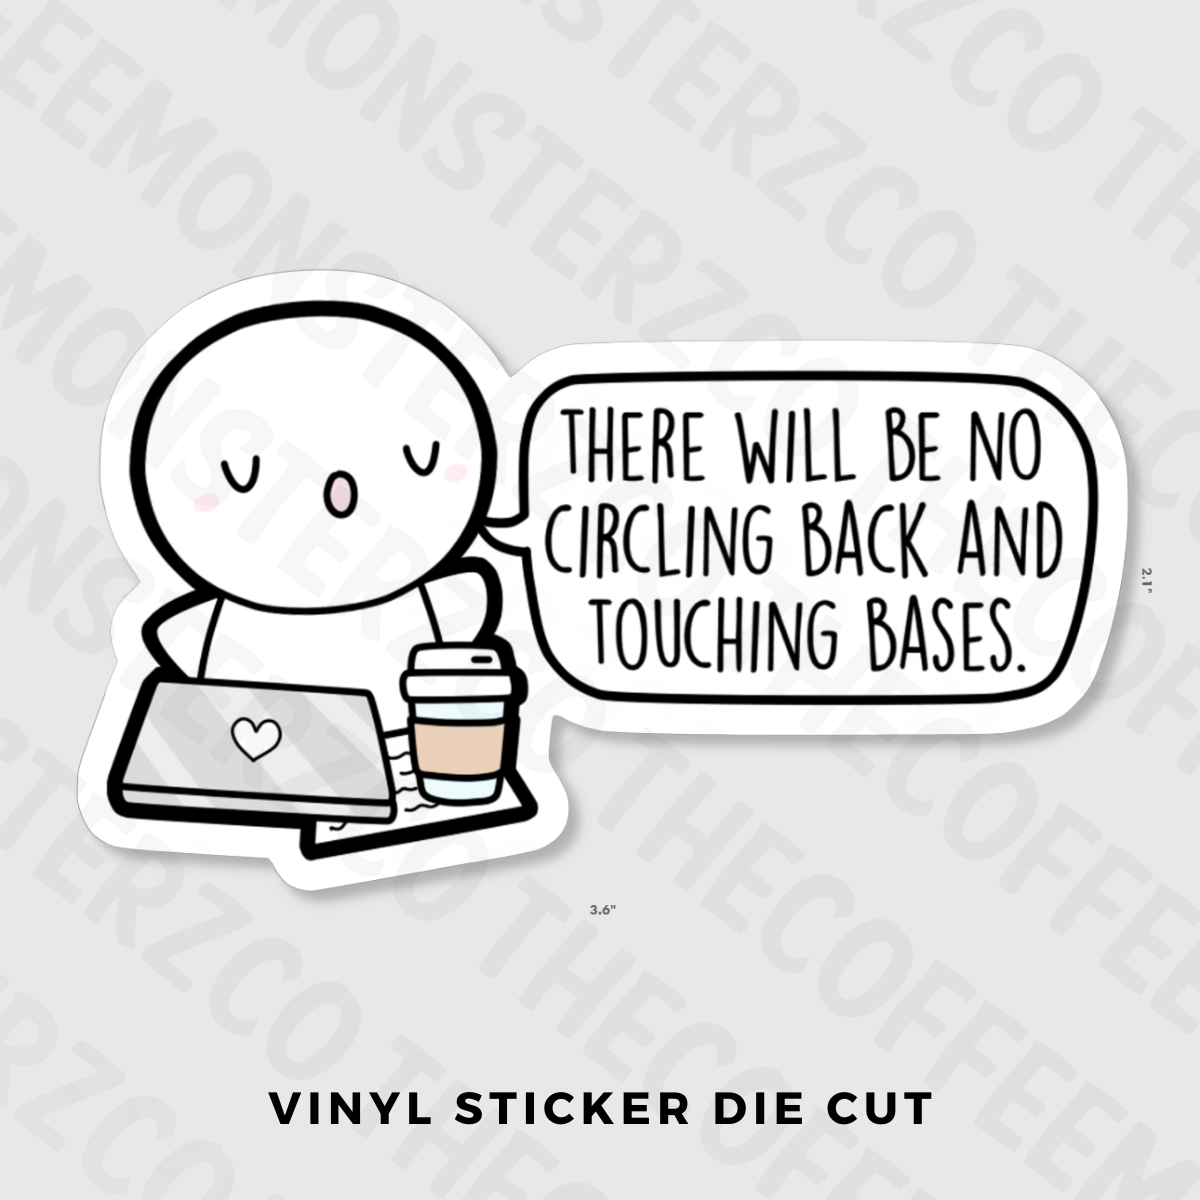 Corporate Vinyl Stickers (1 per customer)